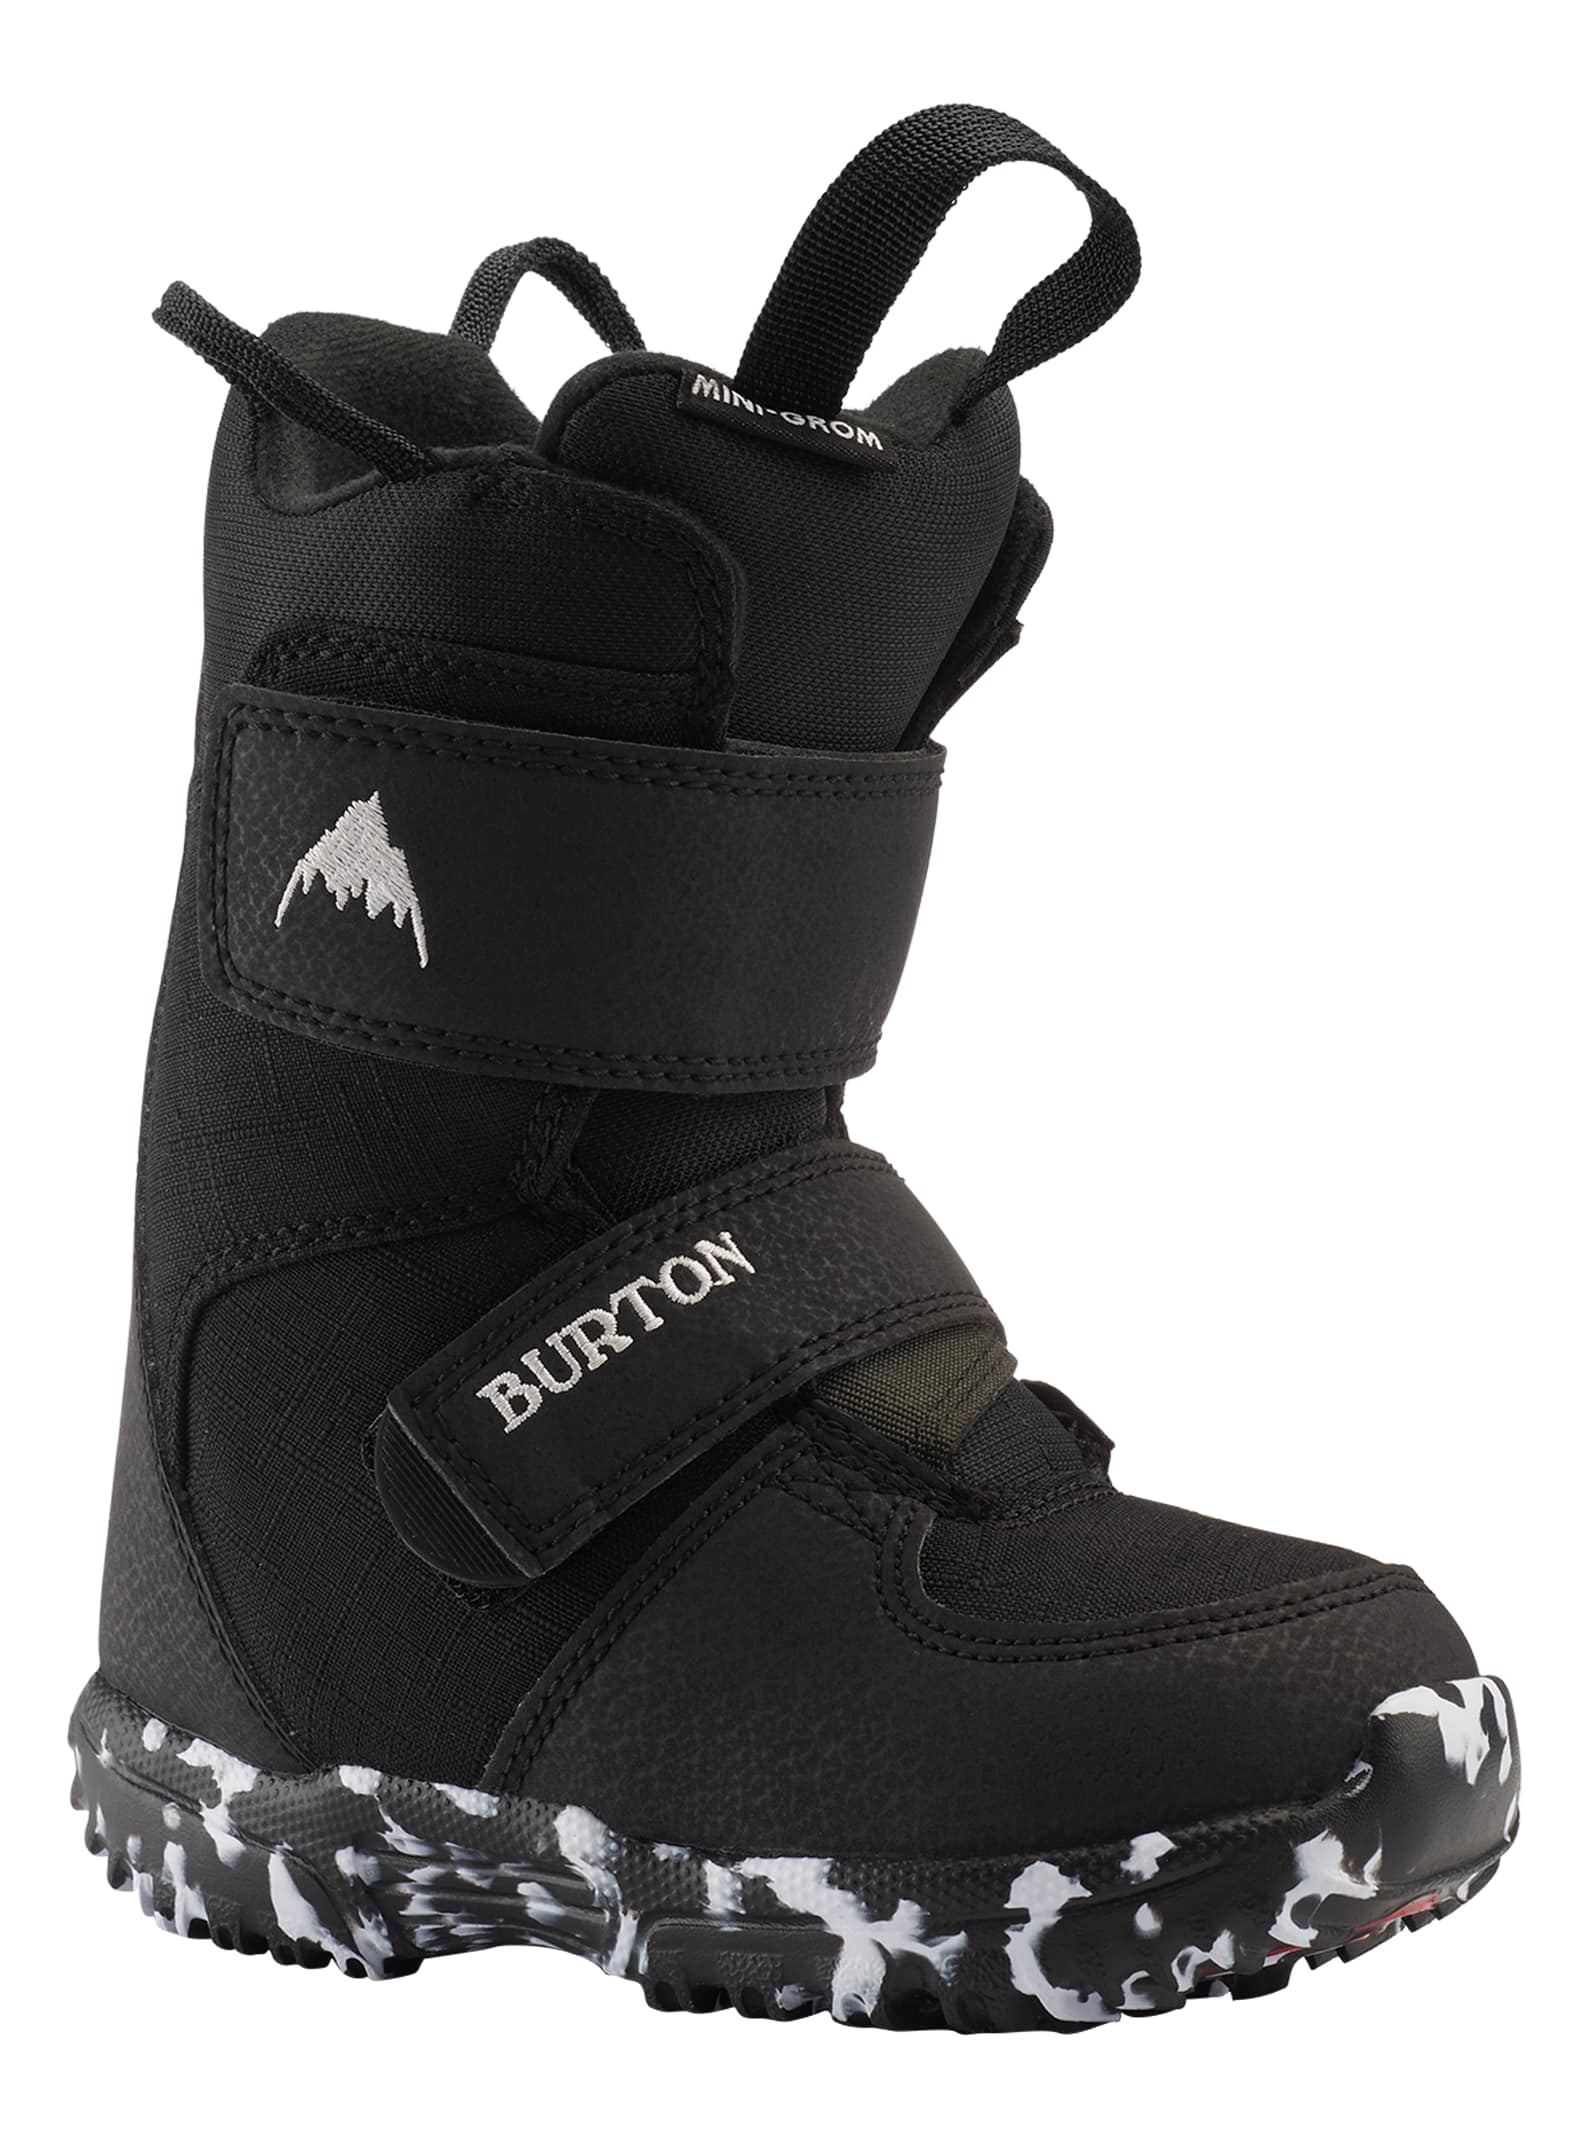 Burton Toddlers' Mini Grom Snowboard Boot, Black, 10C